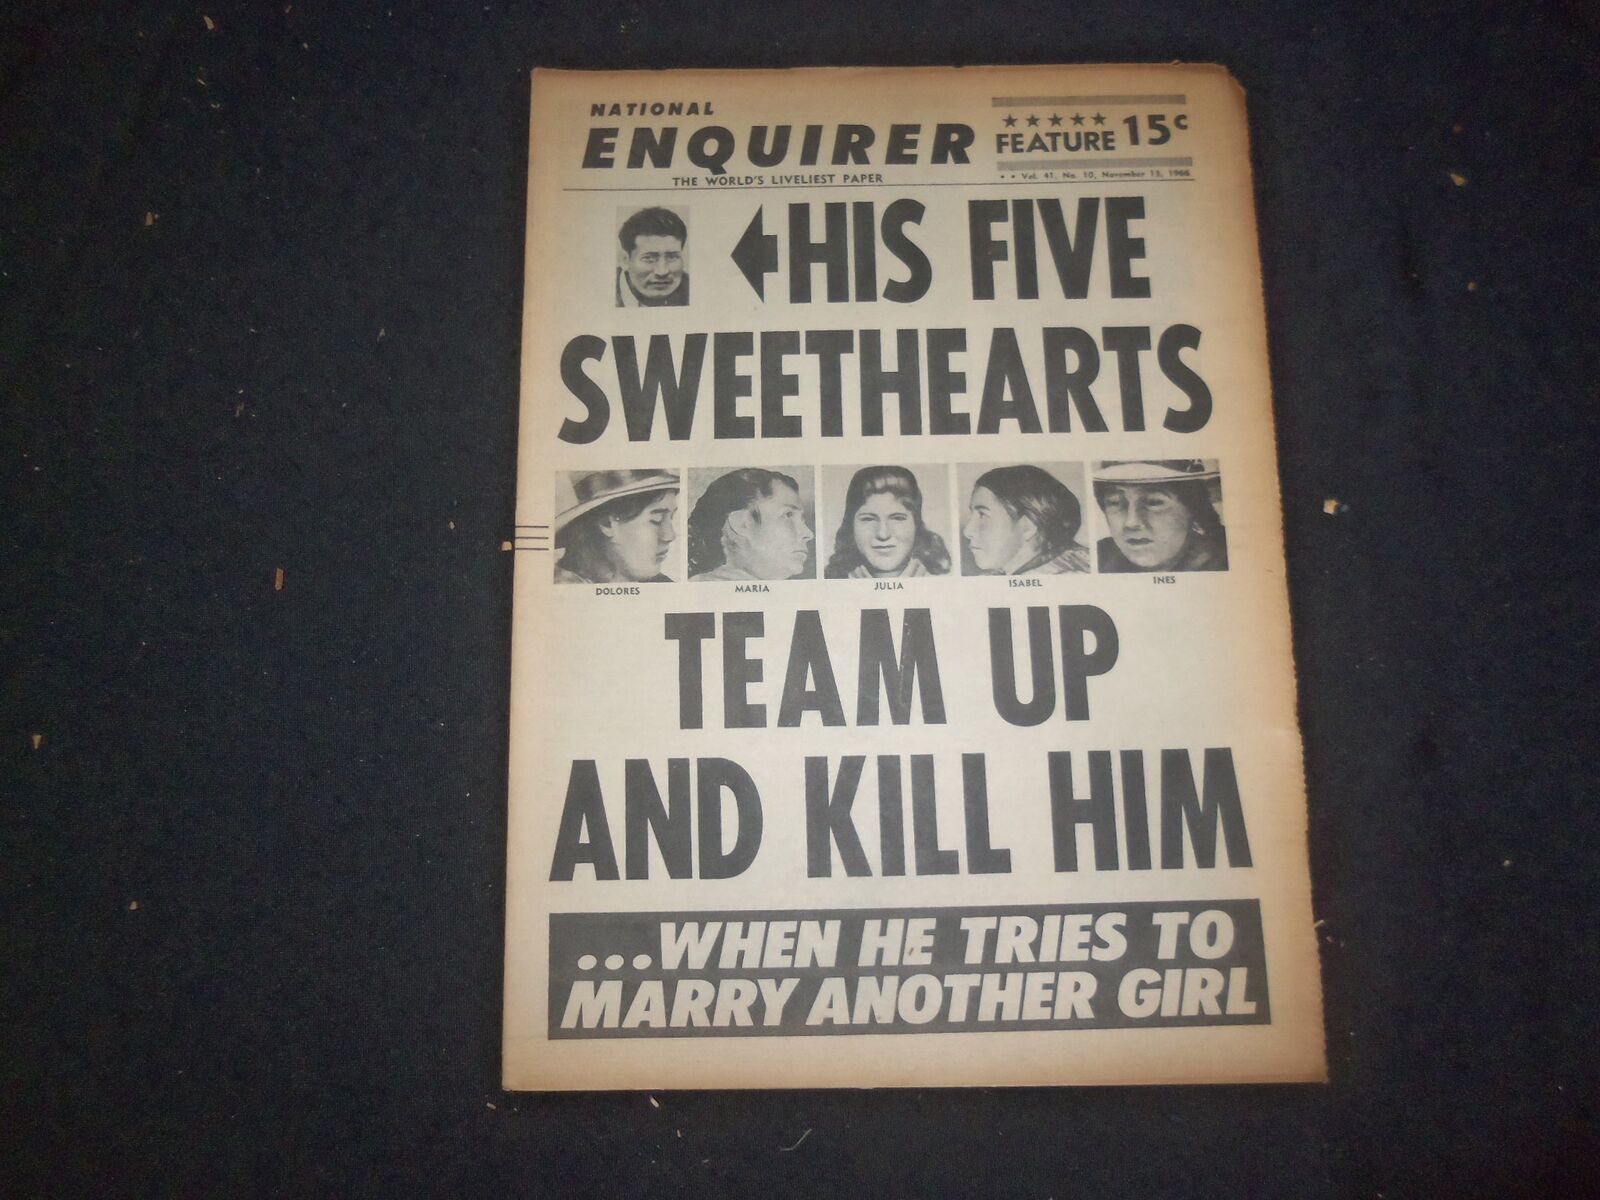 1966 NOV 13 NATIONAL ENQUIRER NEWSPAPER - FIVE SWEETHEARTS KILL HIM - NP 7427